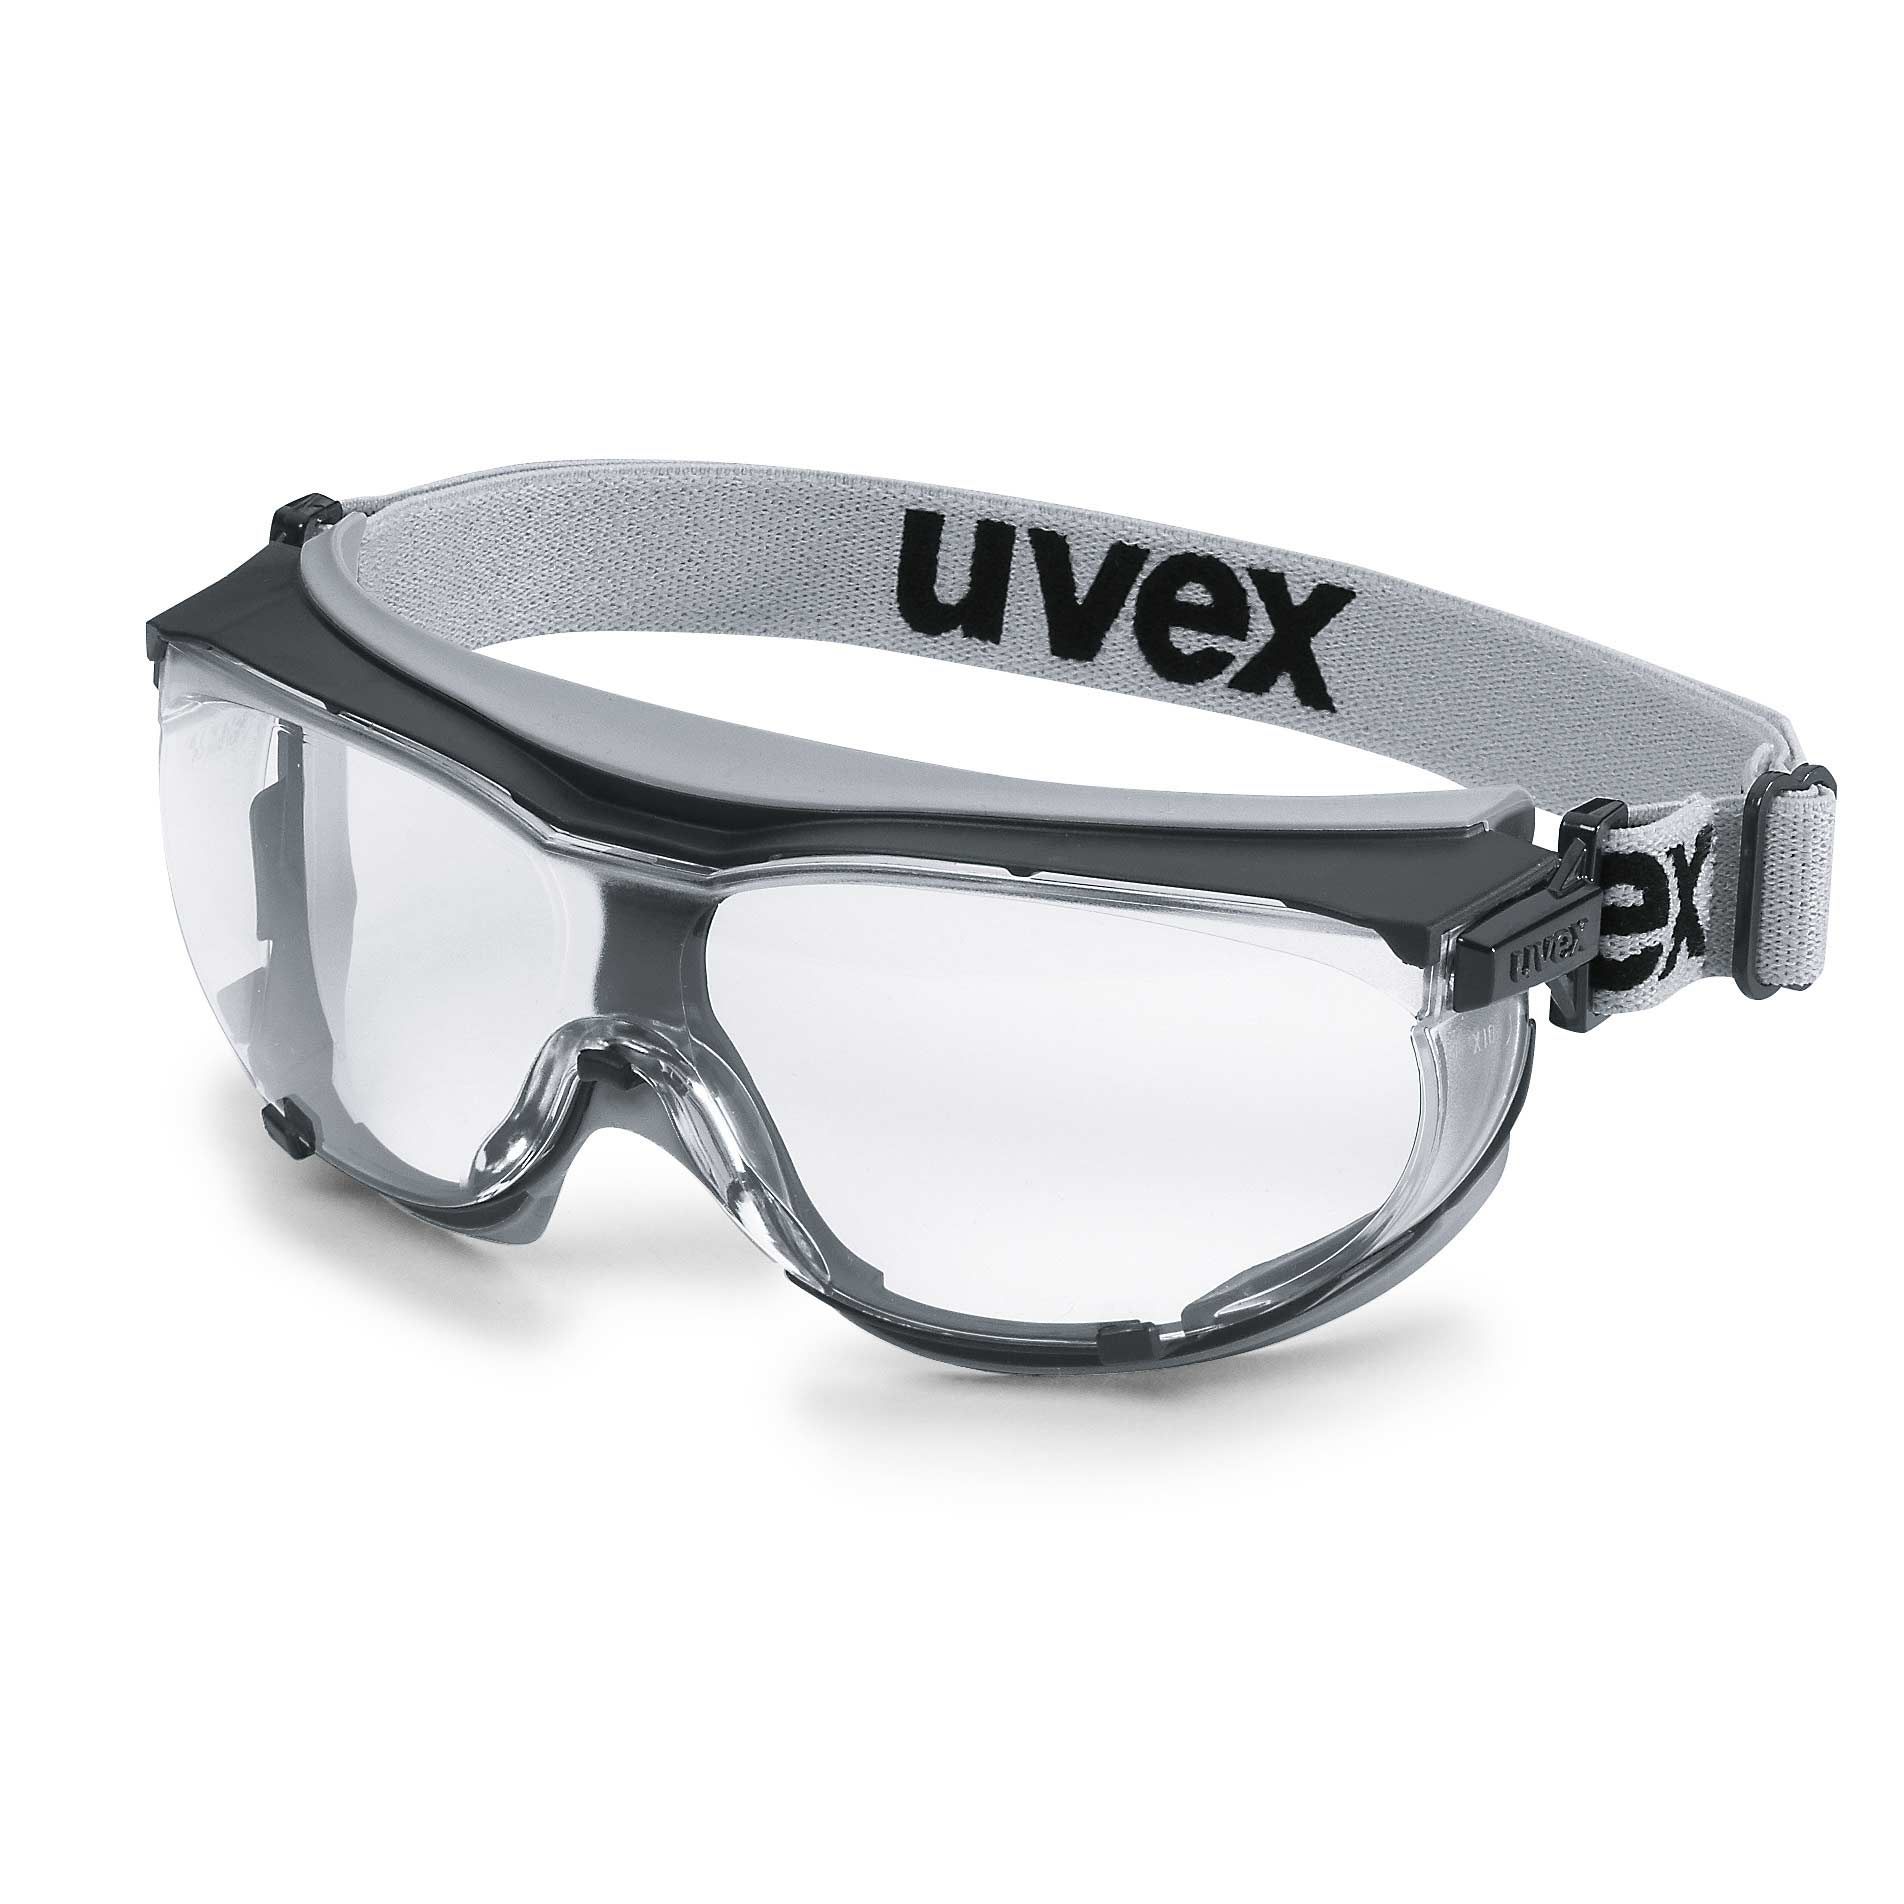 Очки закрытые защитные Uvex Carbonvision 9307375